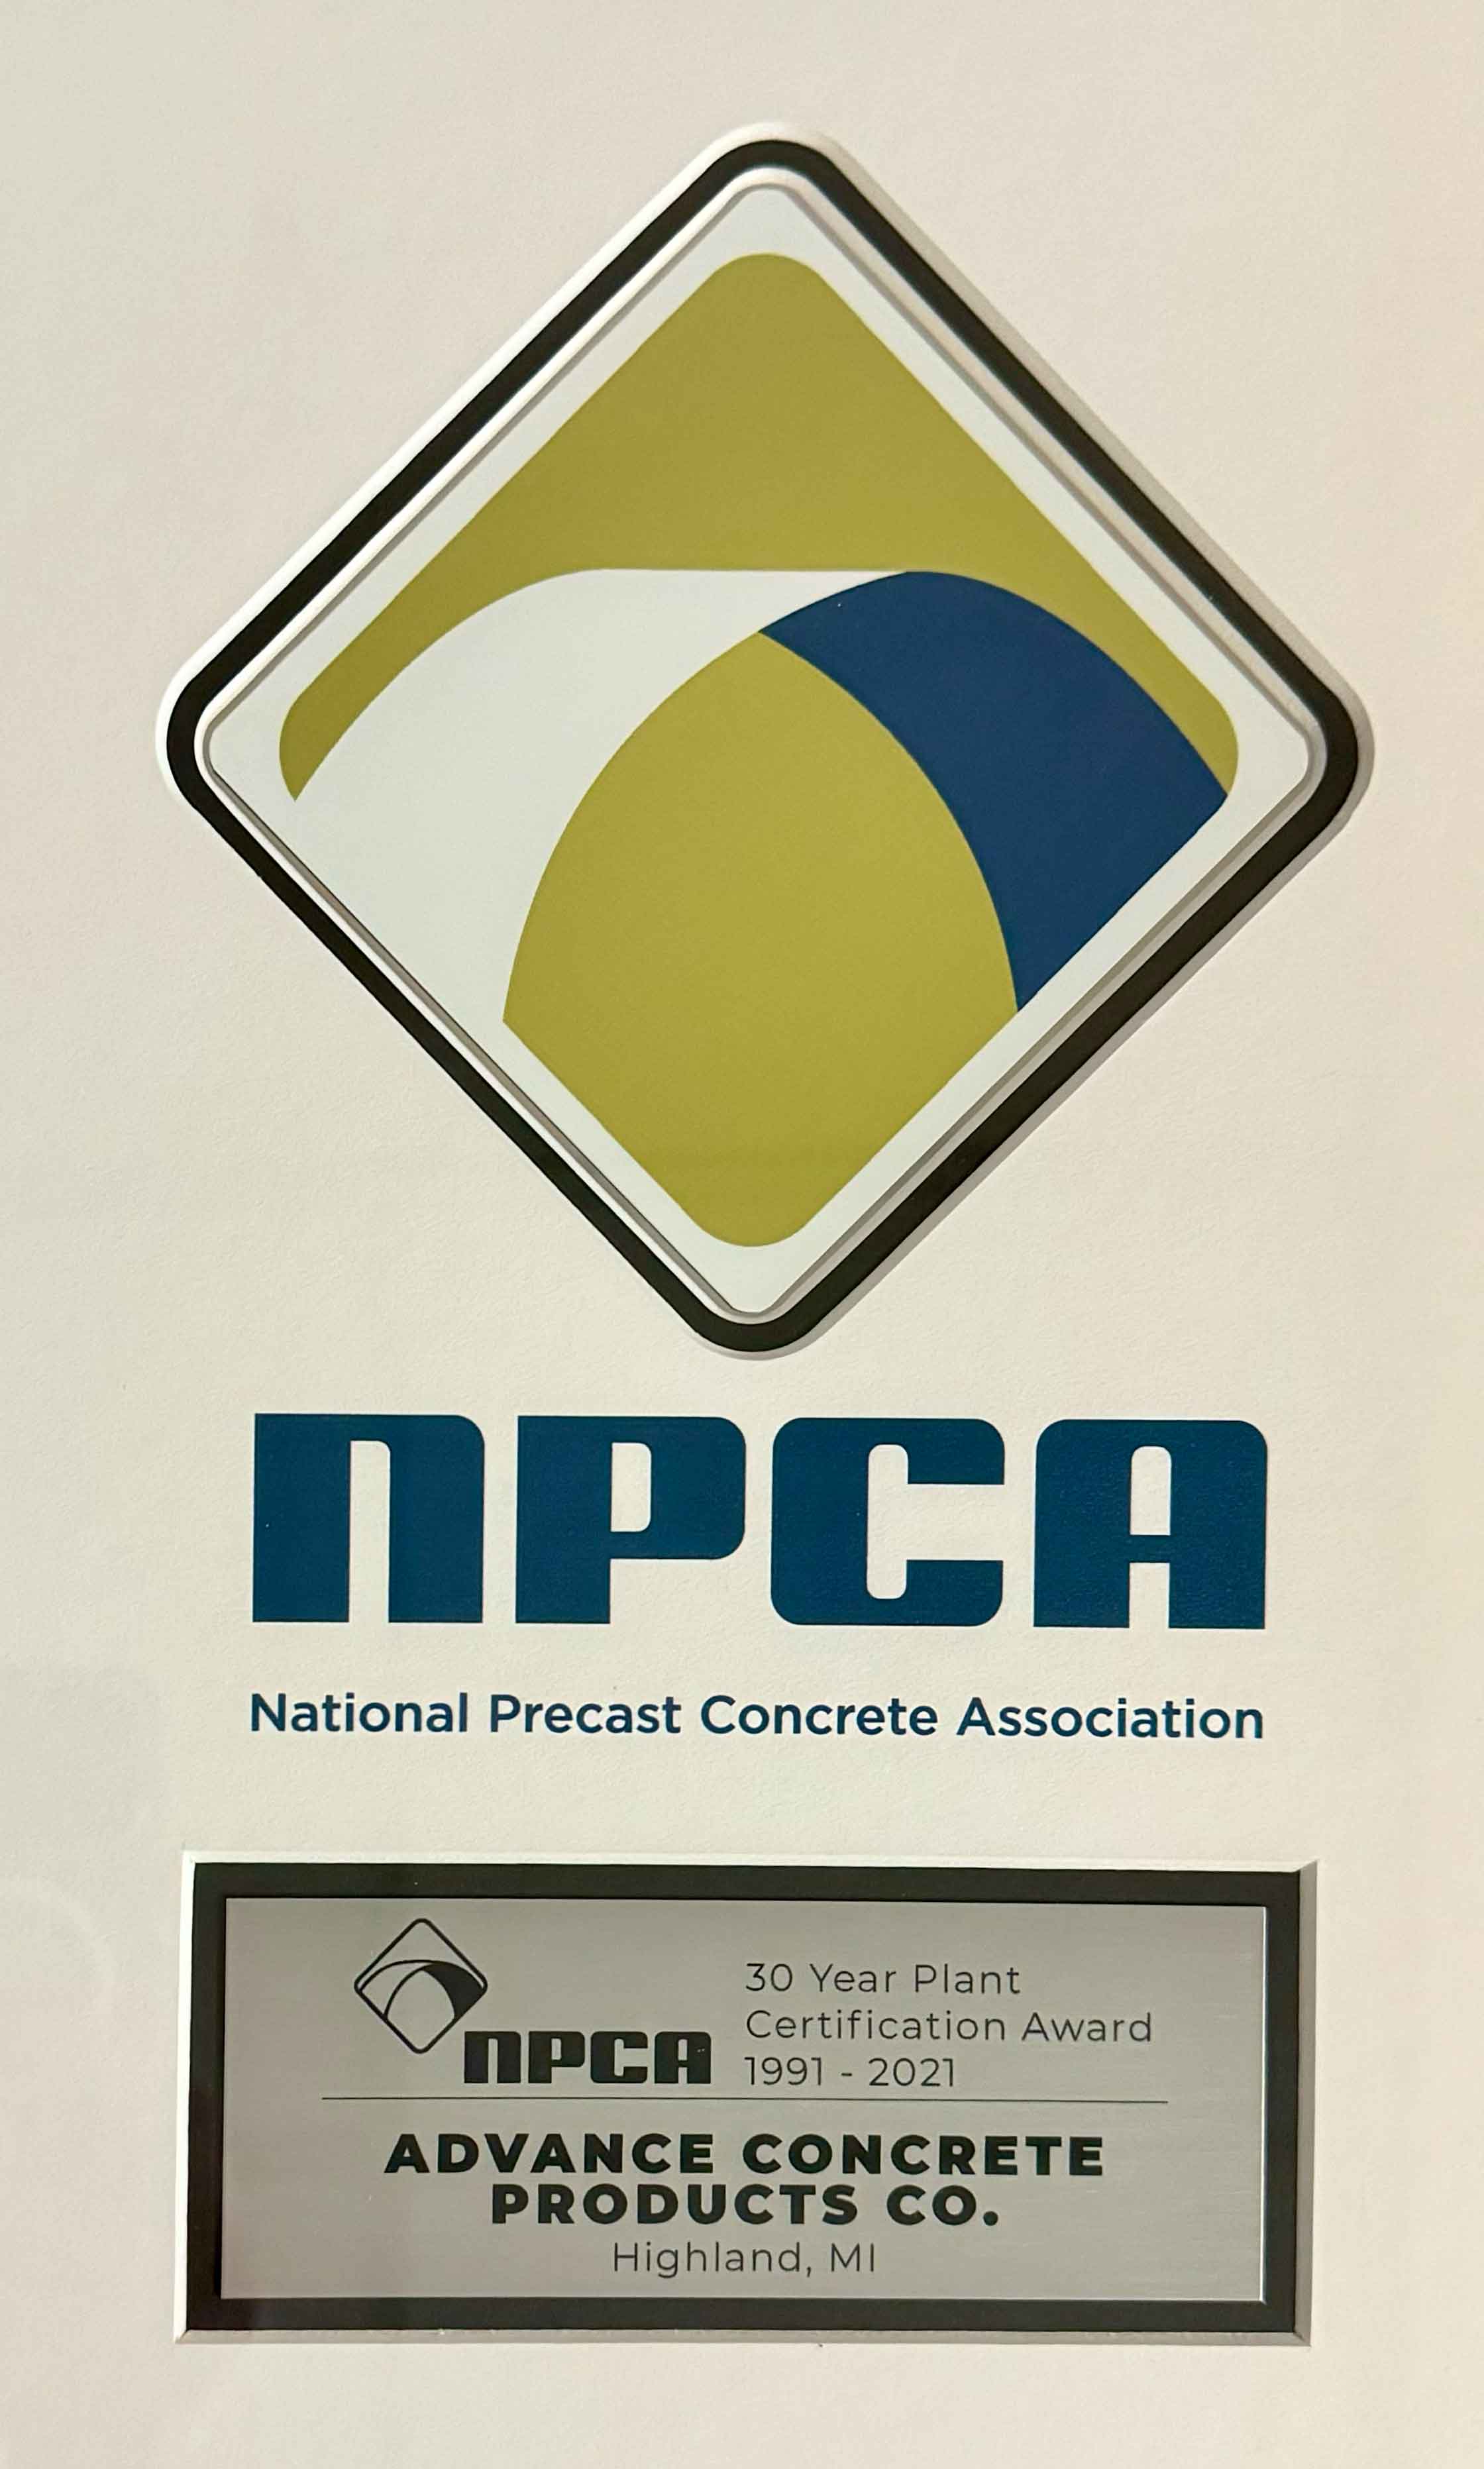 National Precast Concrete Association (NPCA) 30 Year Plant Certification Award